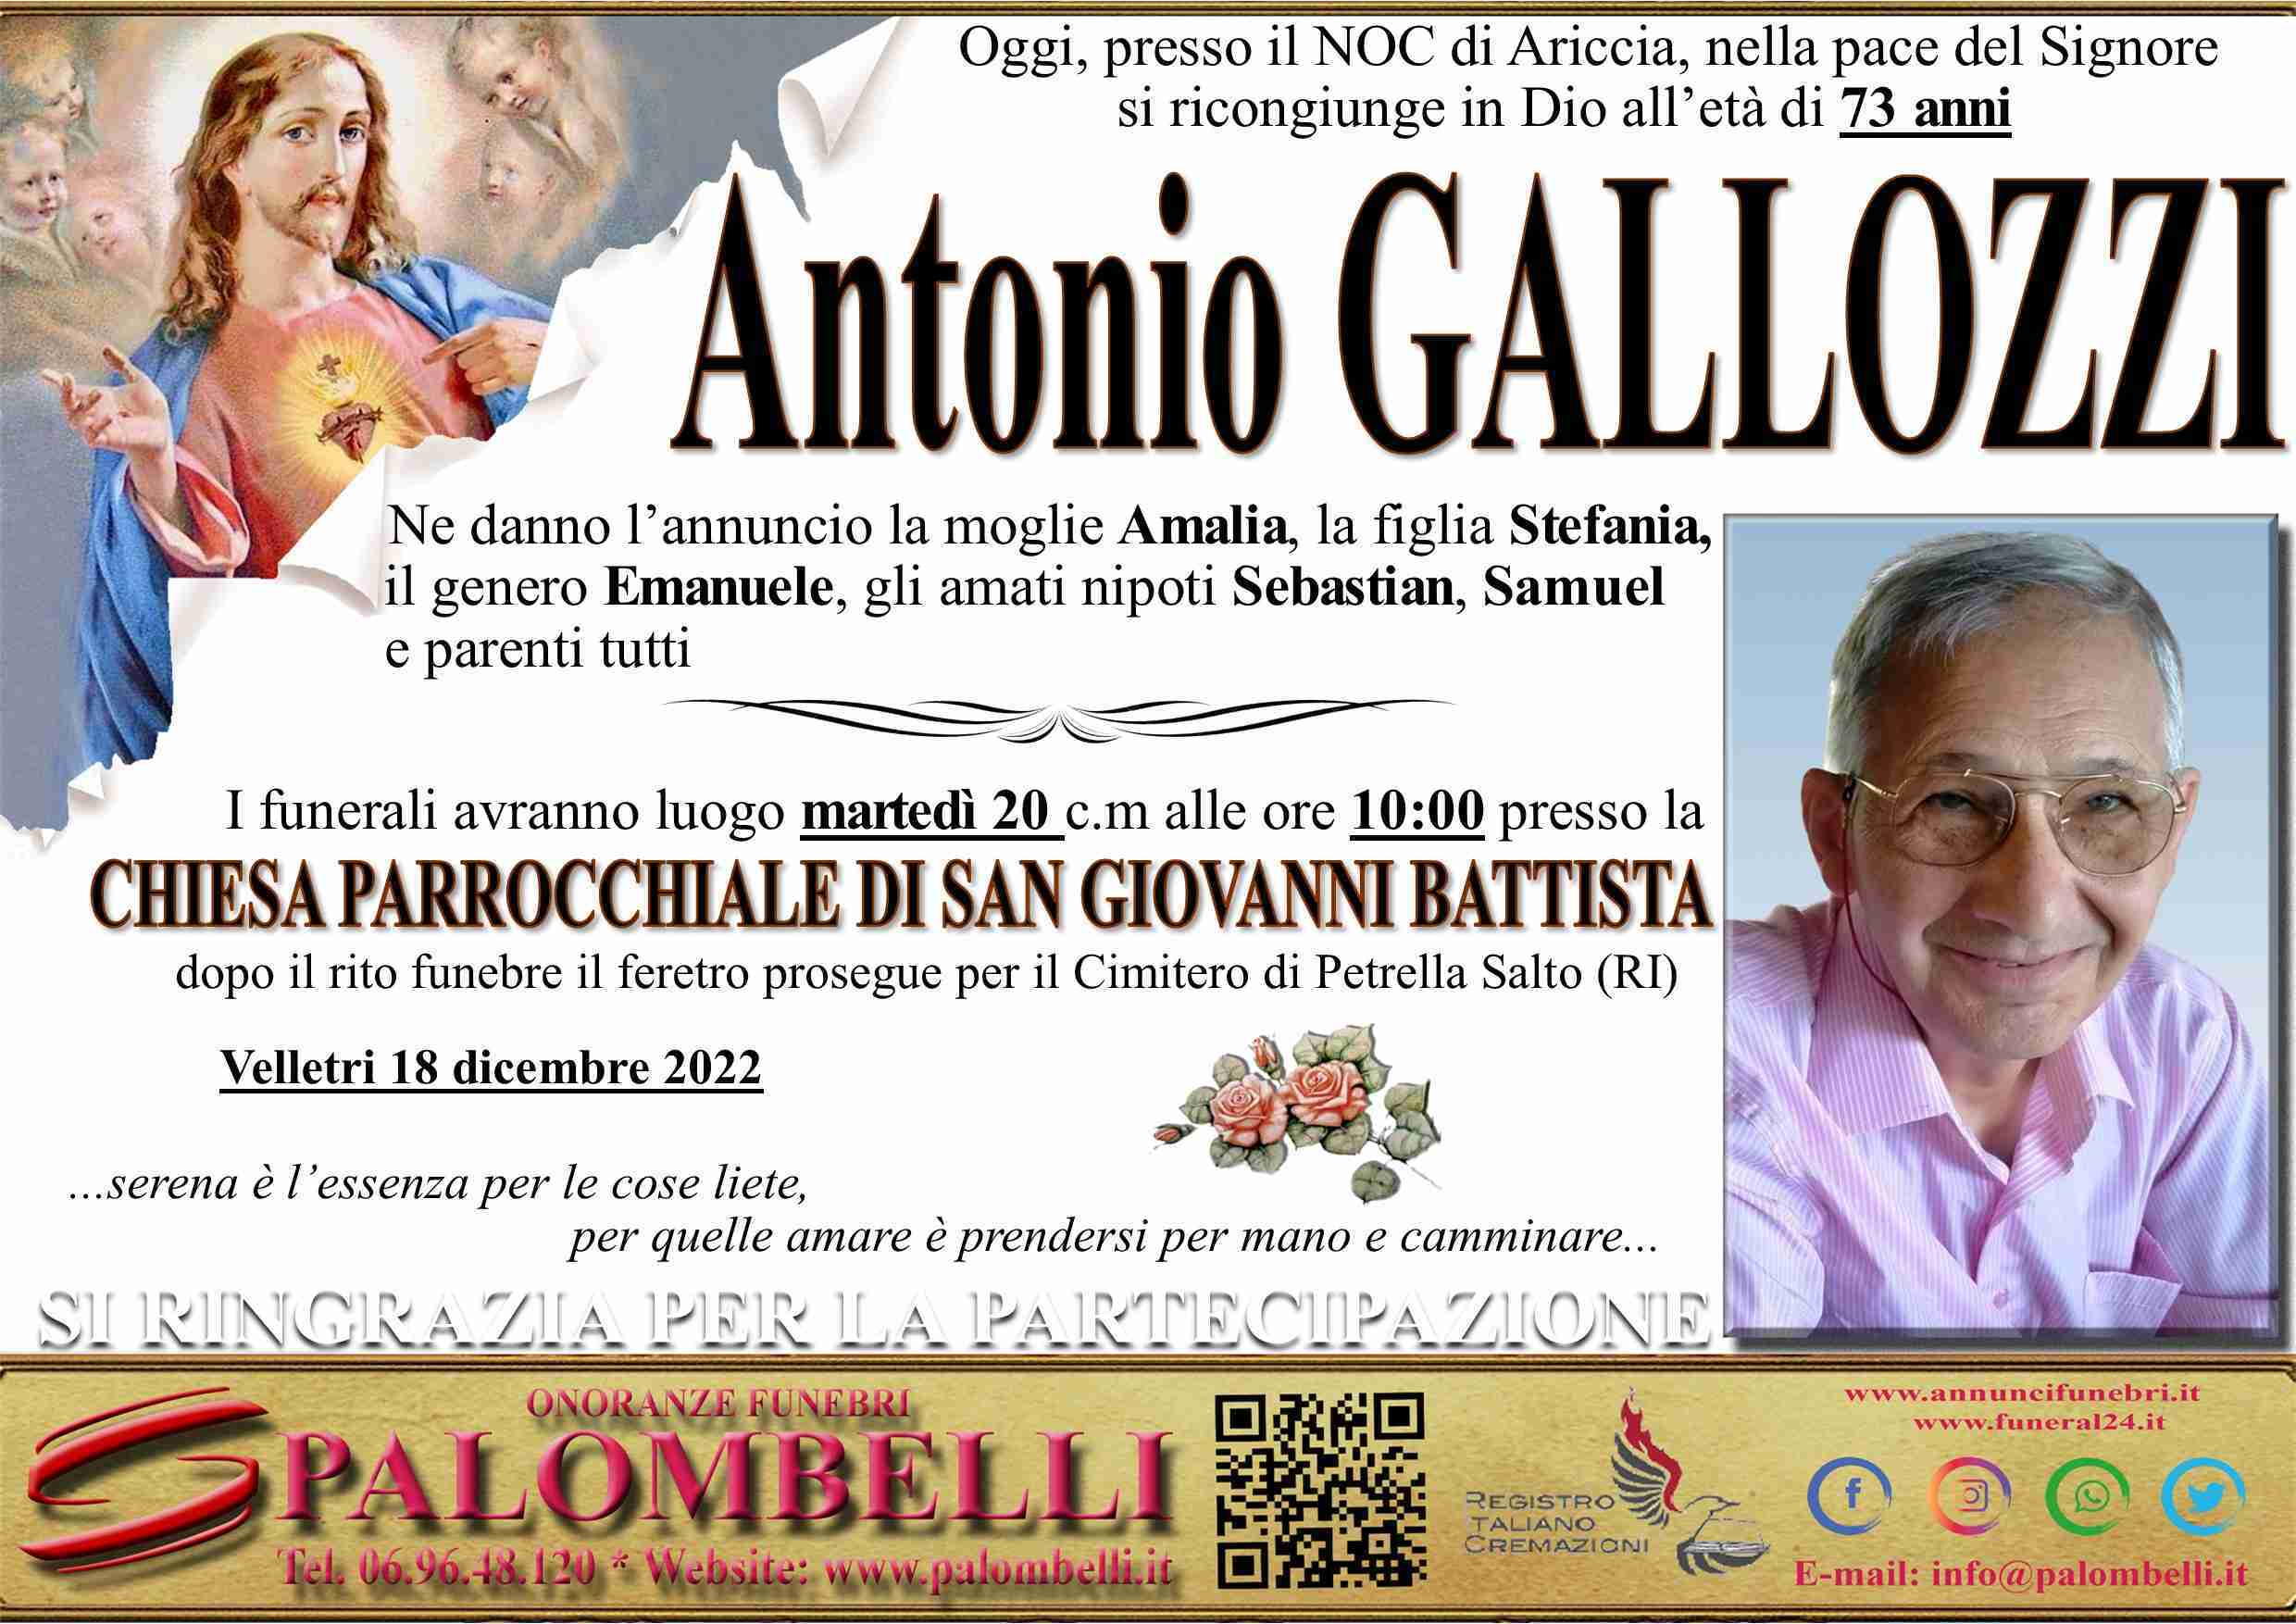 Antonio Gallozzi